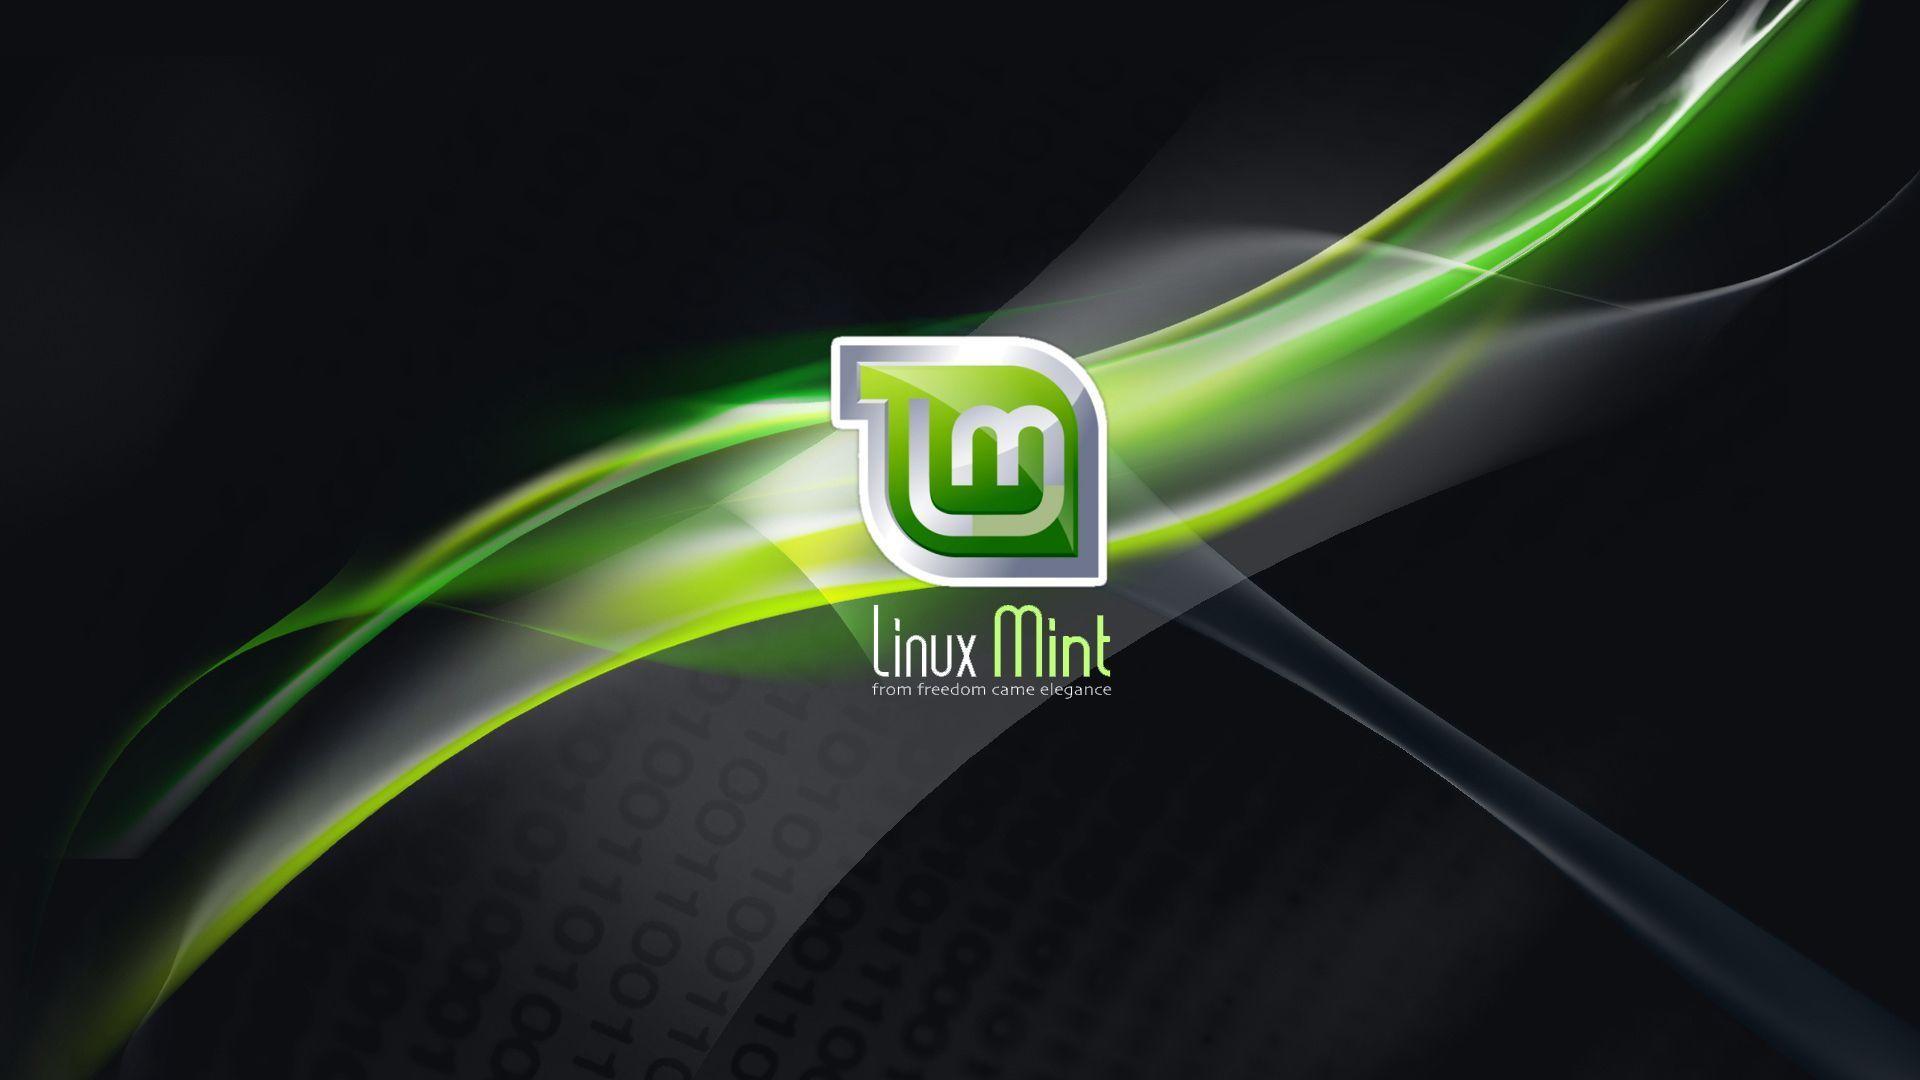 Linux Mint Desktop Background